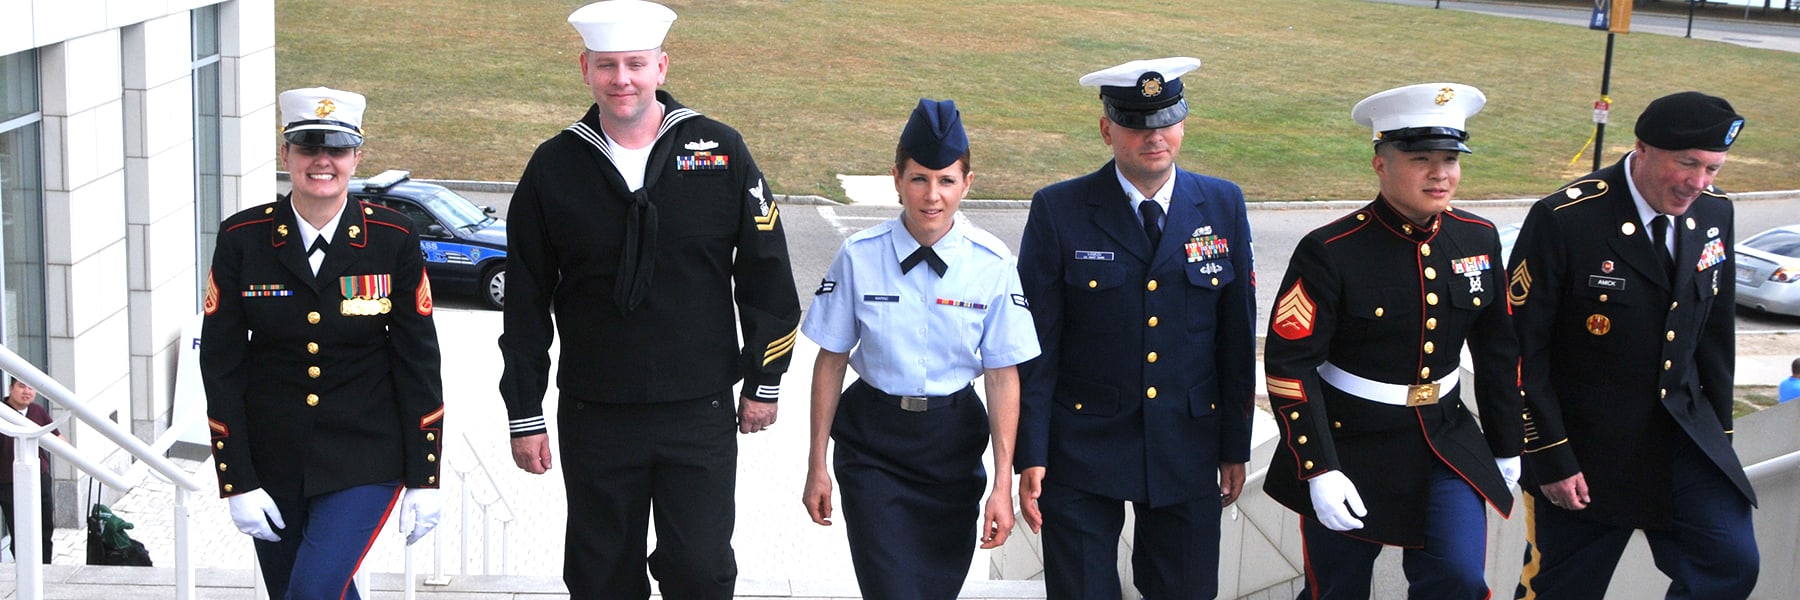 group of veterans in uniform walks up campus center steps.